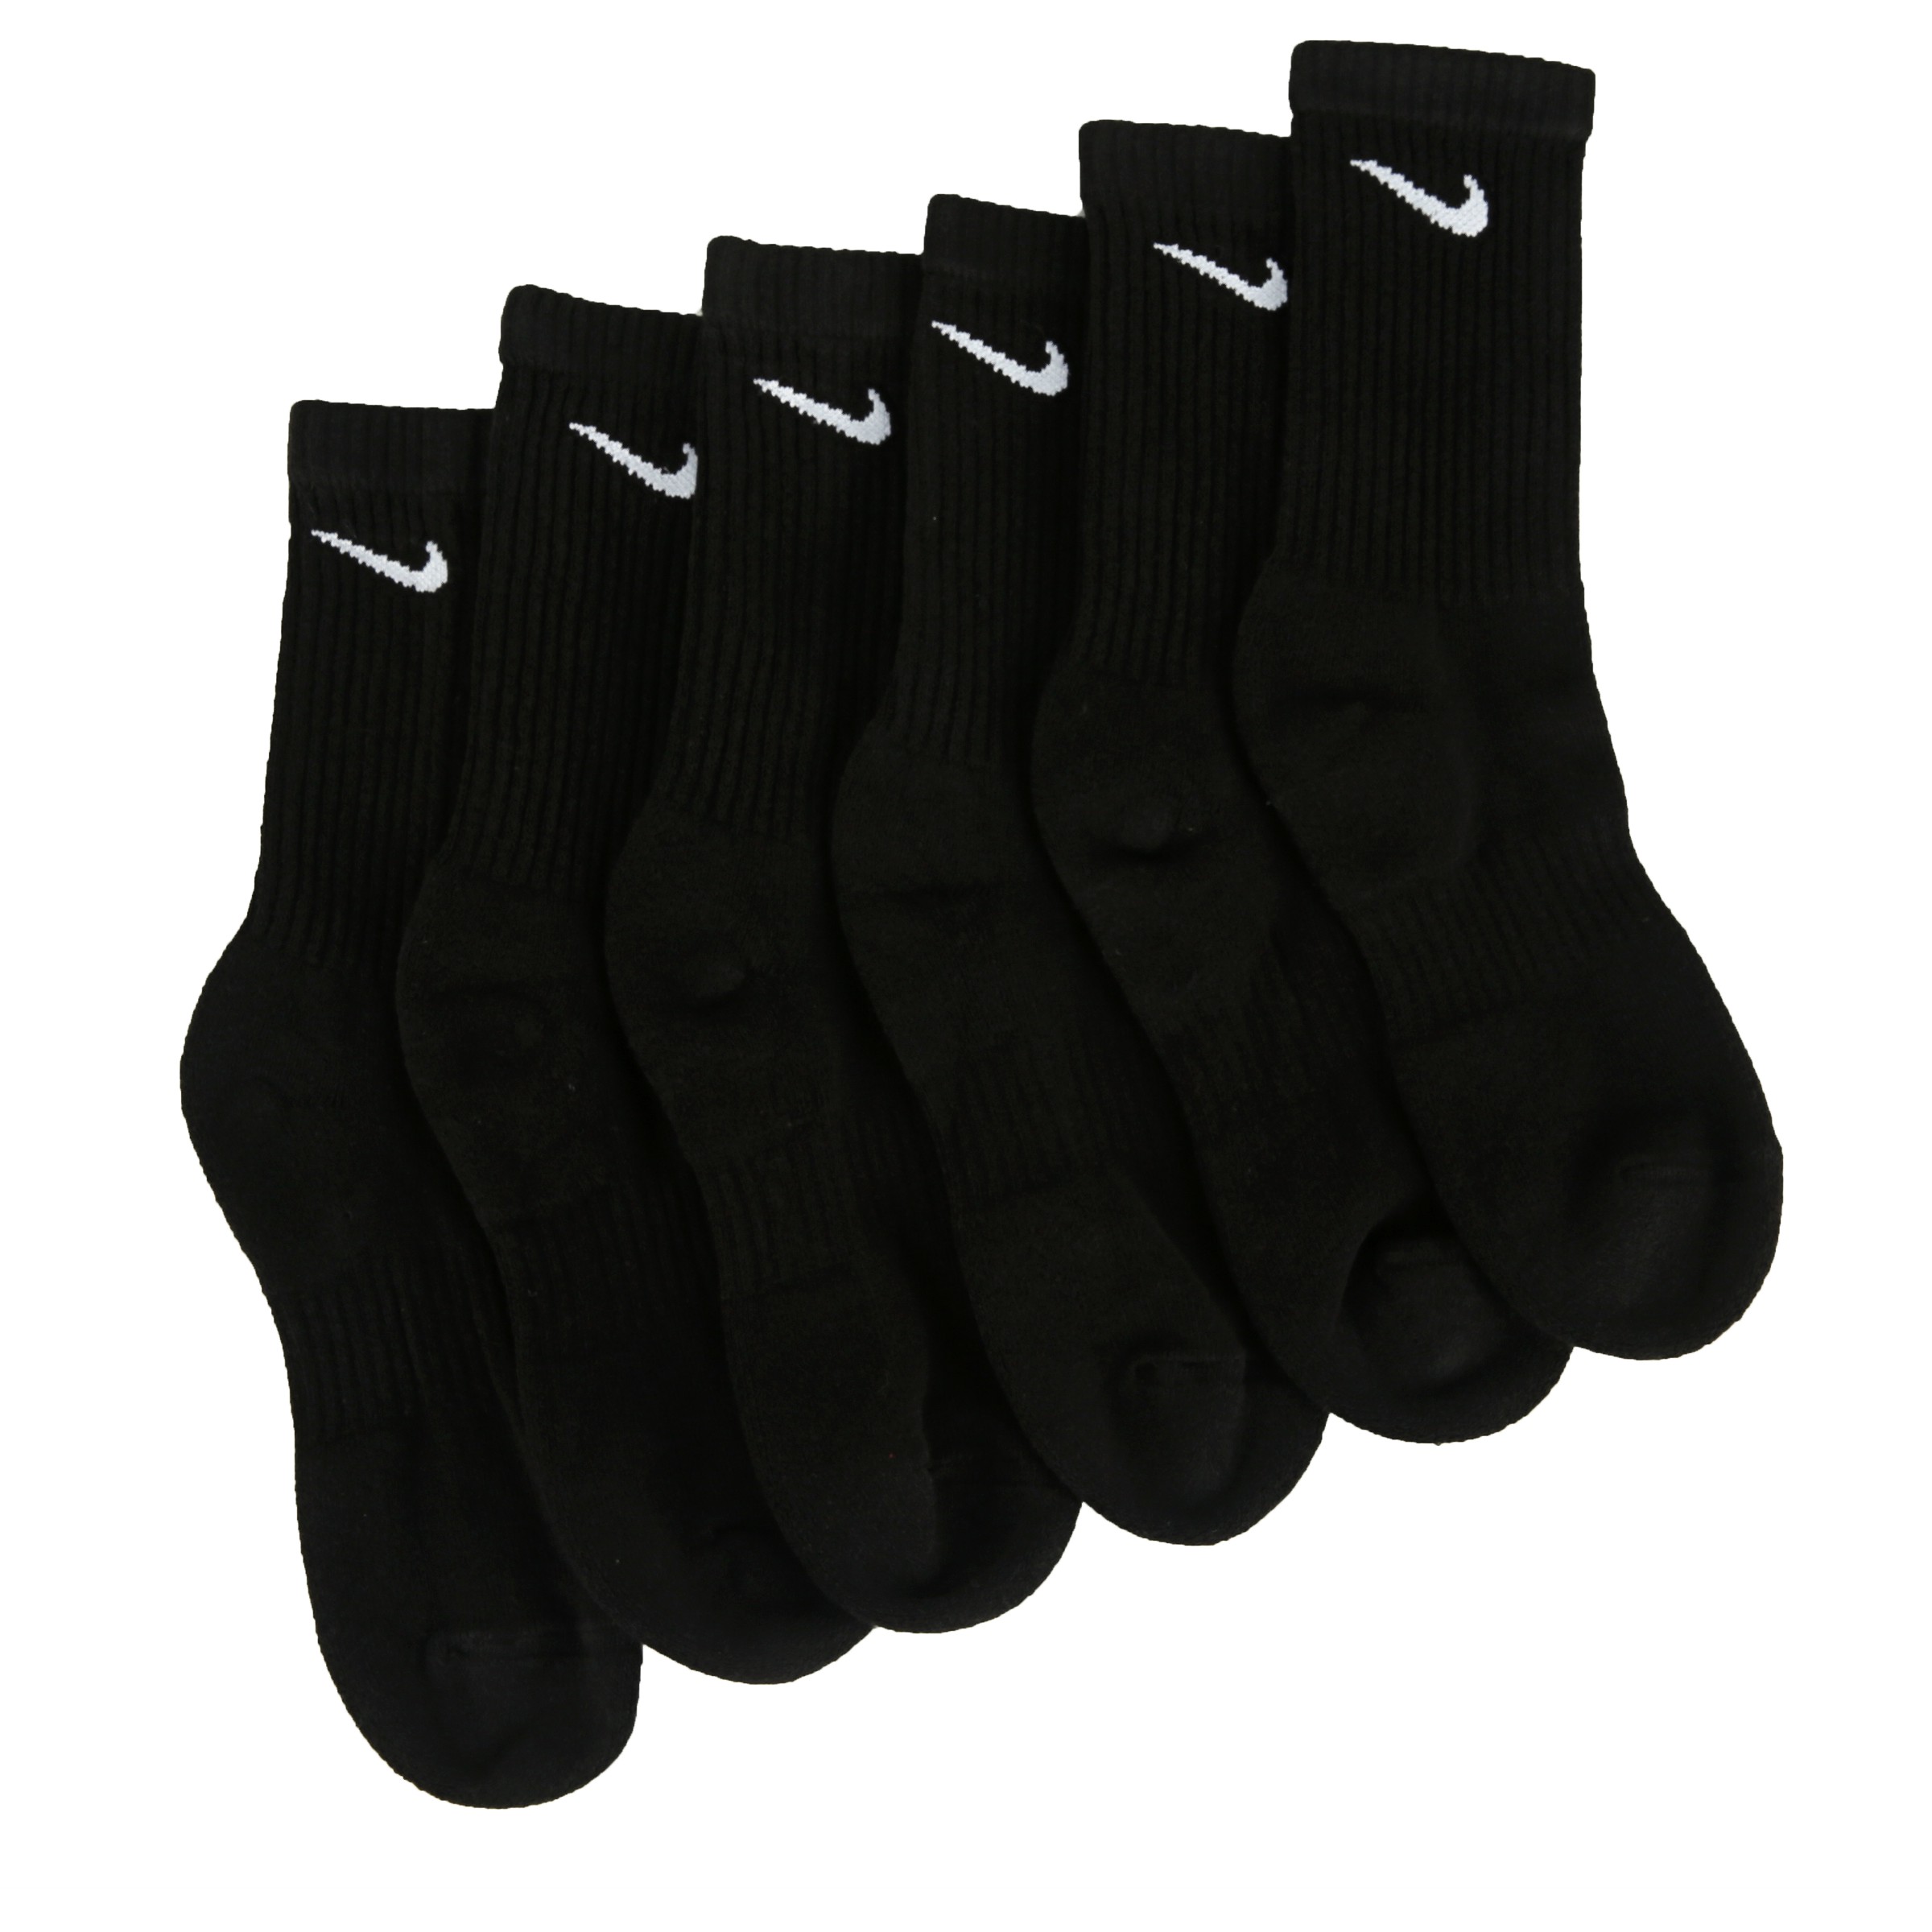 Nike 6 Pack Medium Everyday Cushioned Crew Socks | Footwear